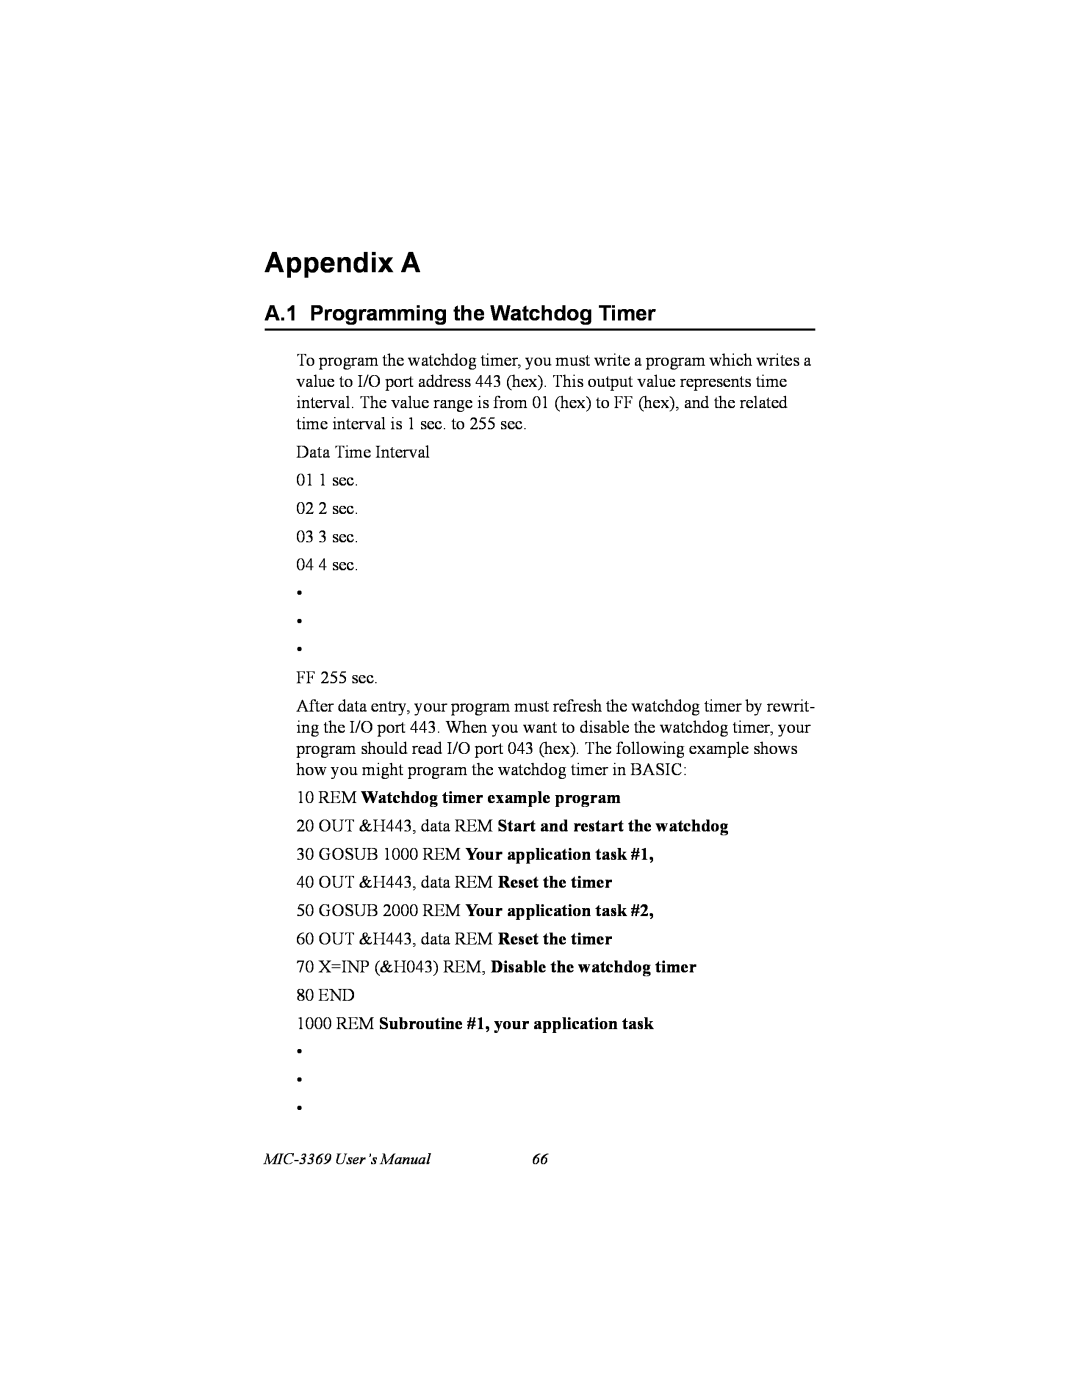 Intel MIC-3358 user manual Appendix A, A.1 Programming the Watchdog Timer, REM Watchdog timer example program 